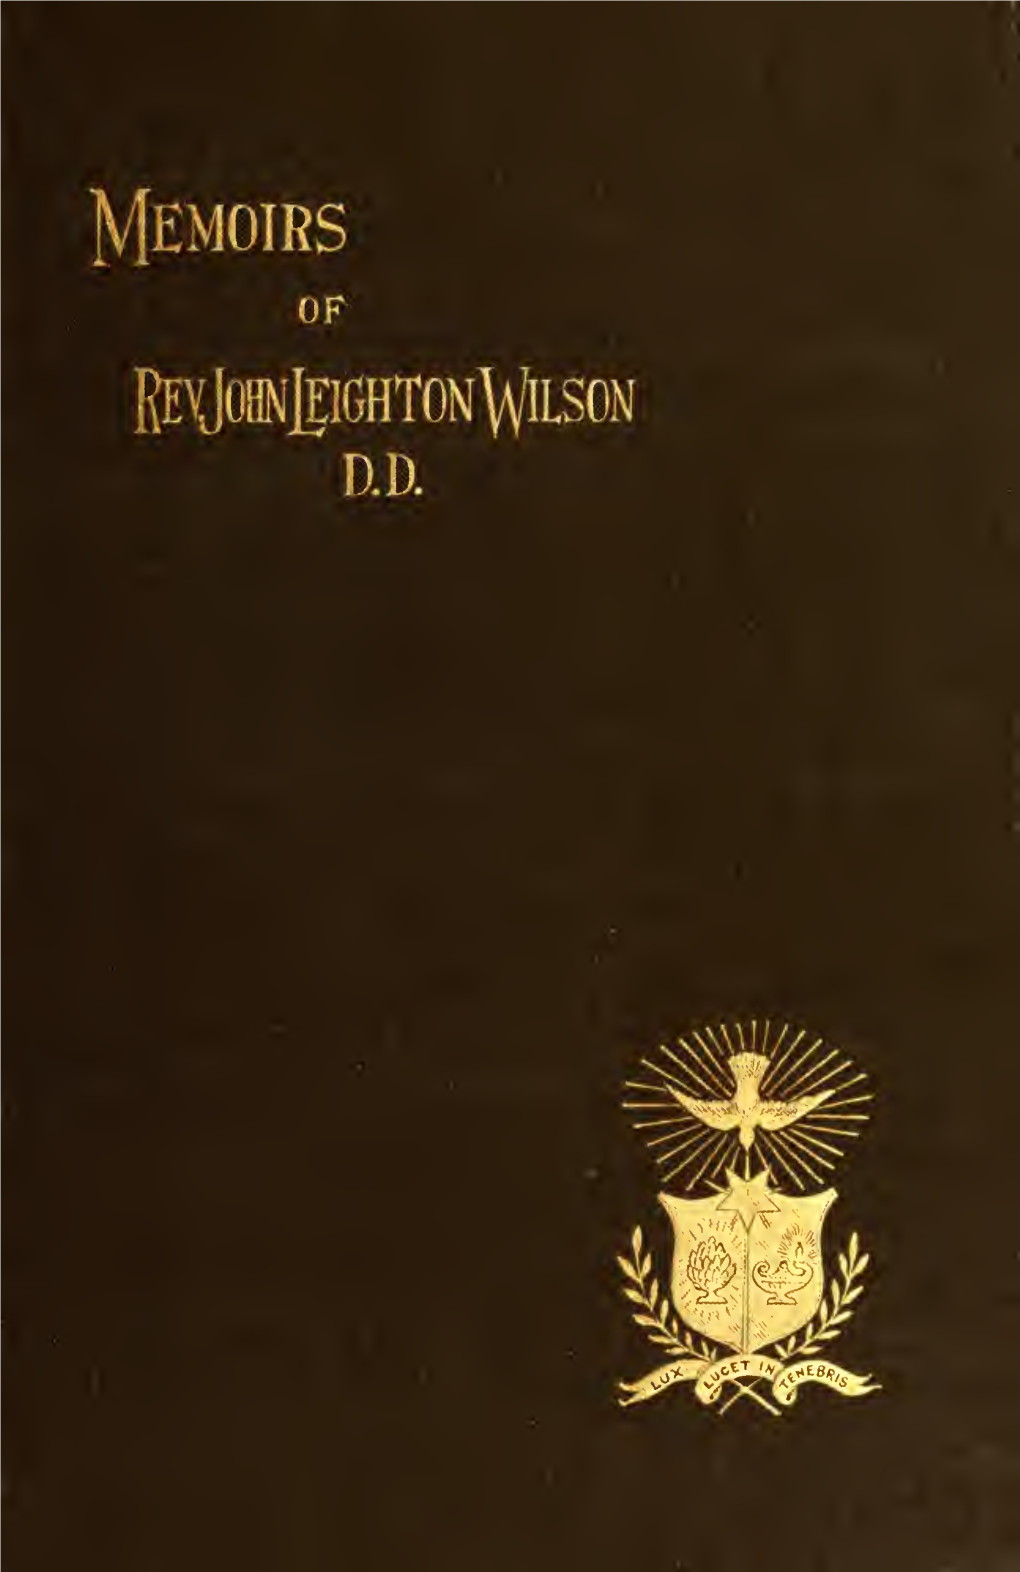 Memoirs of Rev. John Leighton Wilson, Missionary to Africa and Secretary